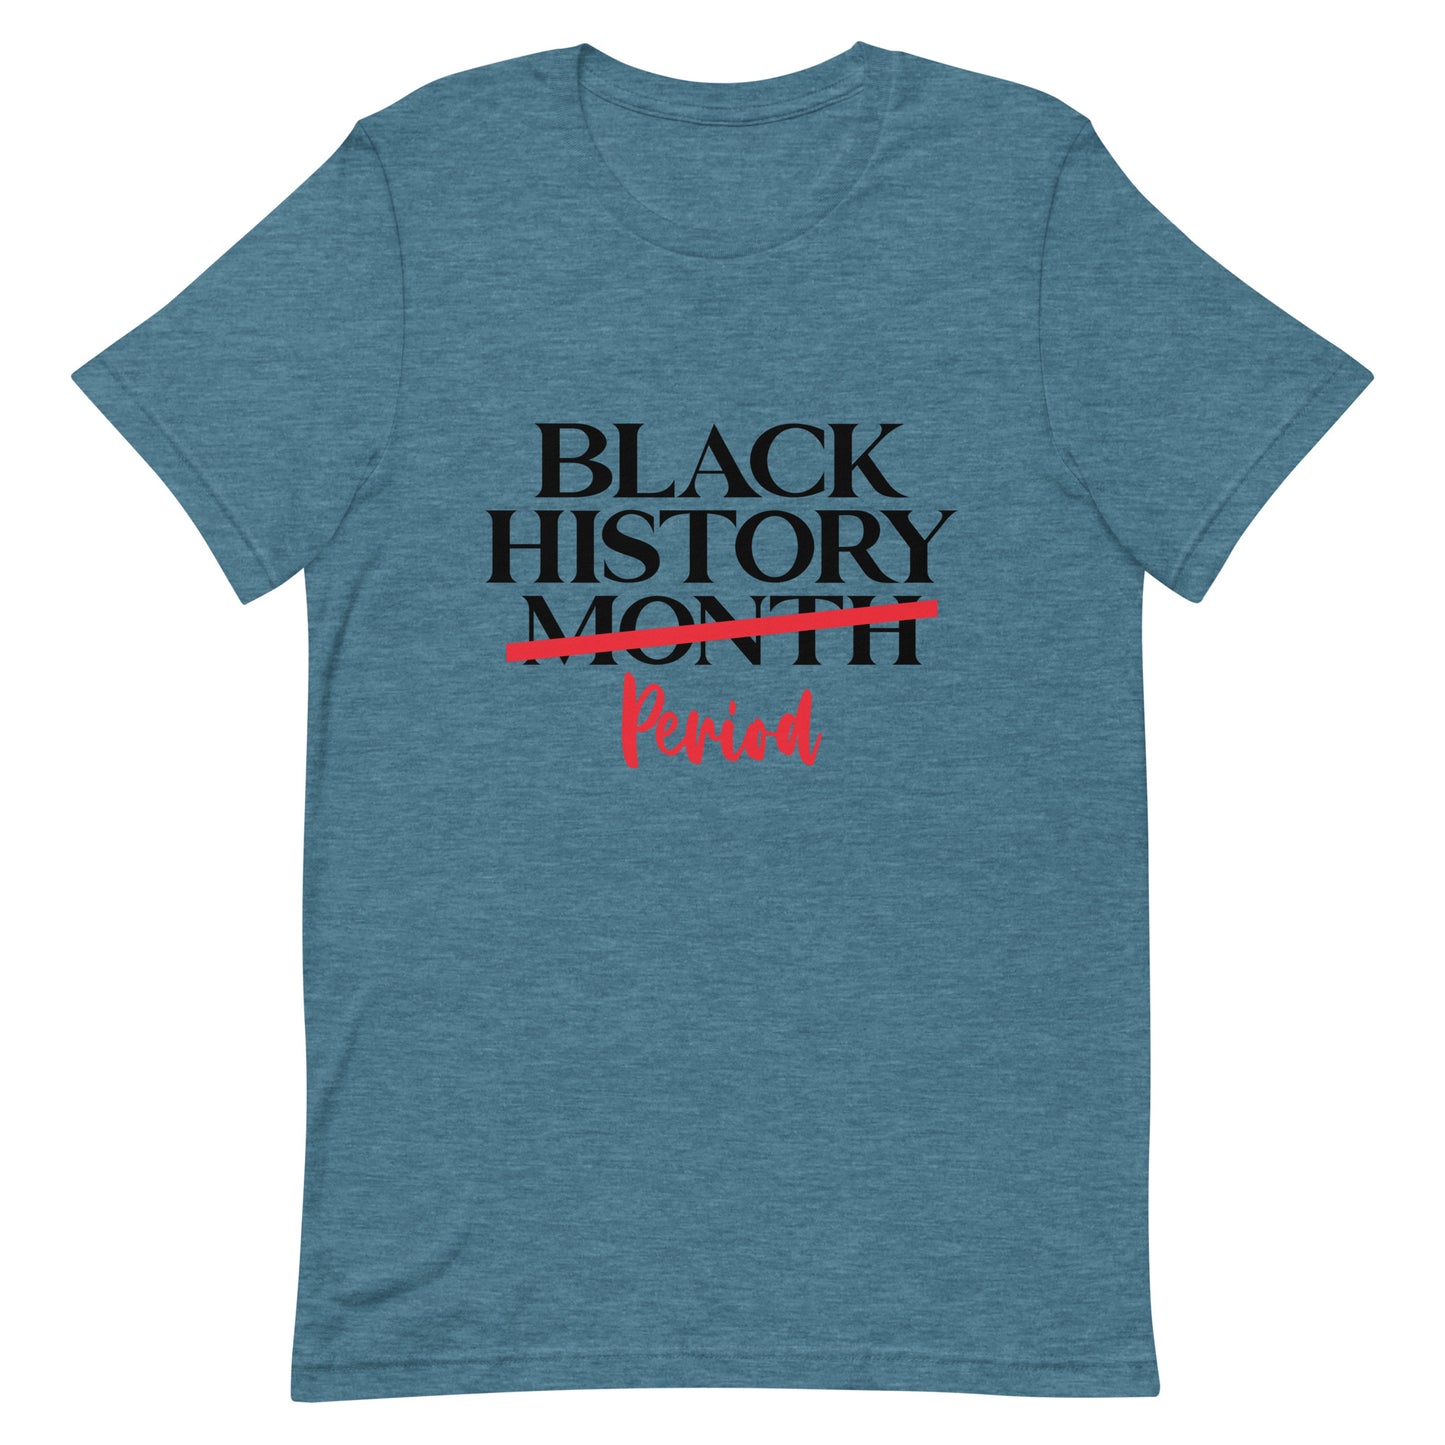 Black History Month Period Unisex t-shirt